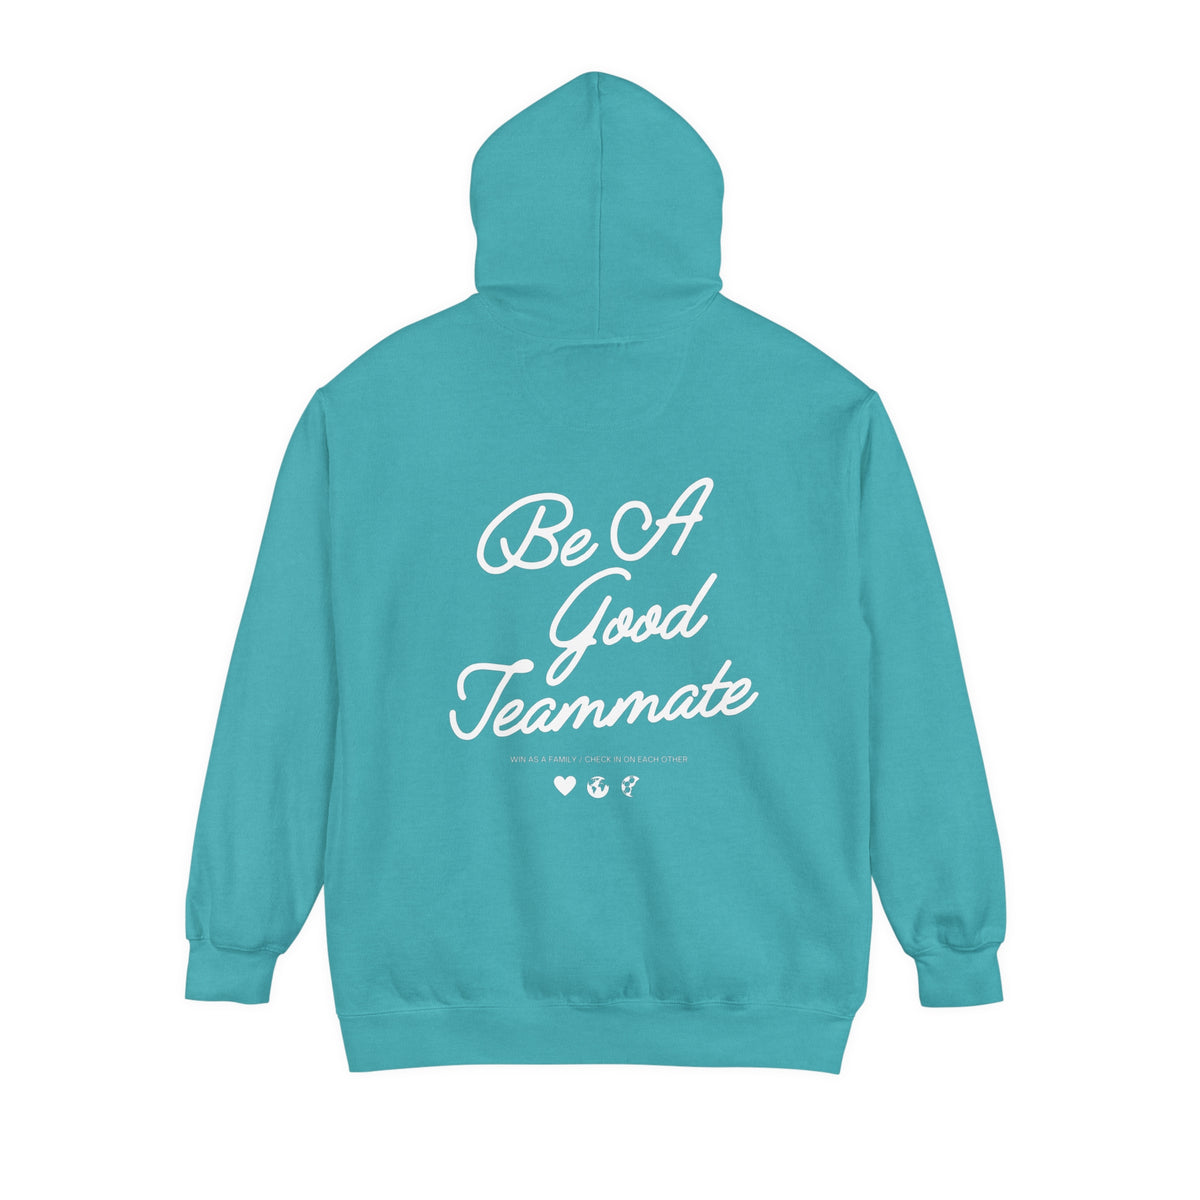 Be A Good Teammate Adult Hooded Sweatshirt